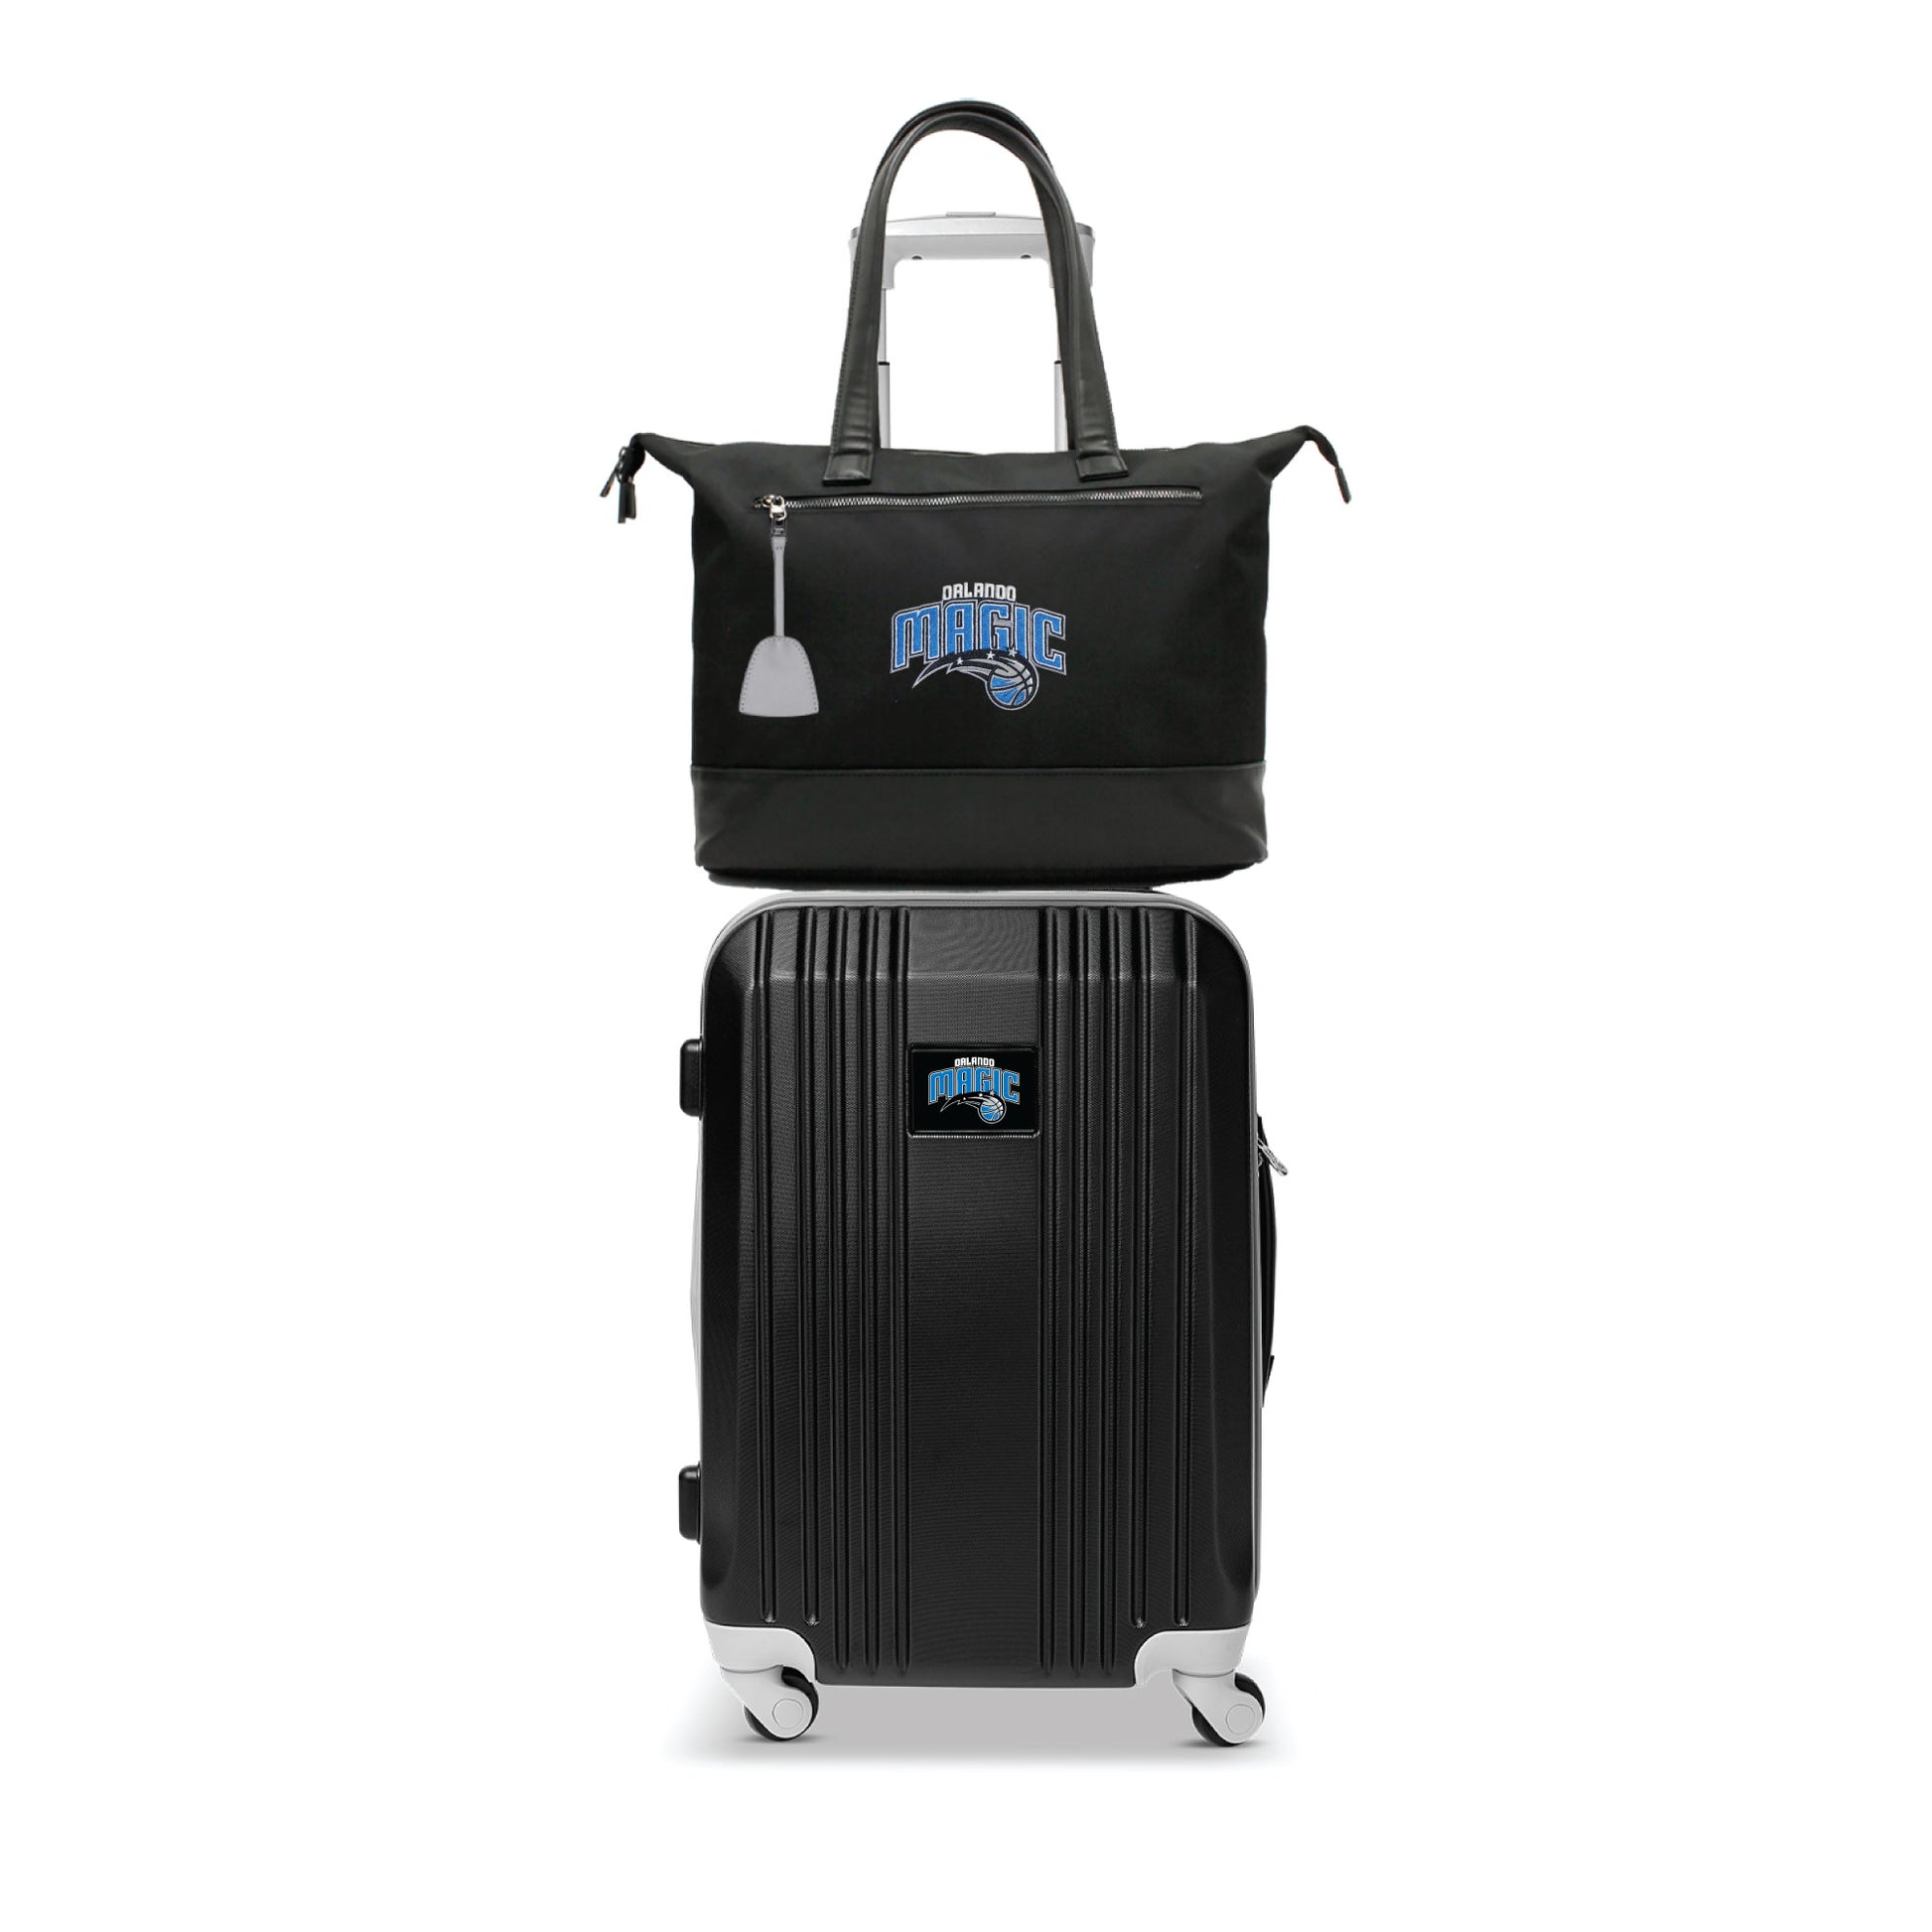 Orlando Magic Premium Laptop Tote Bag and Luggage Set